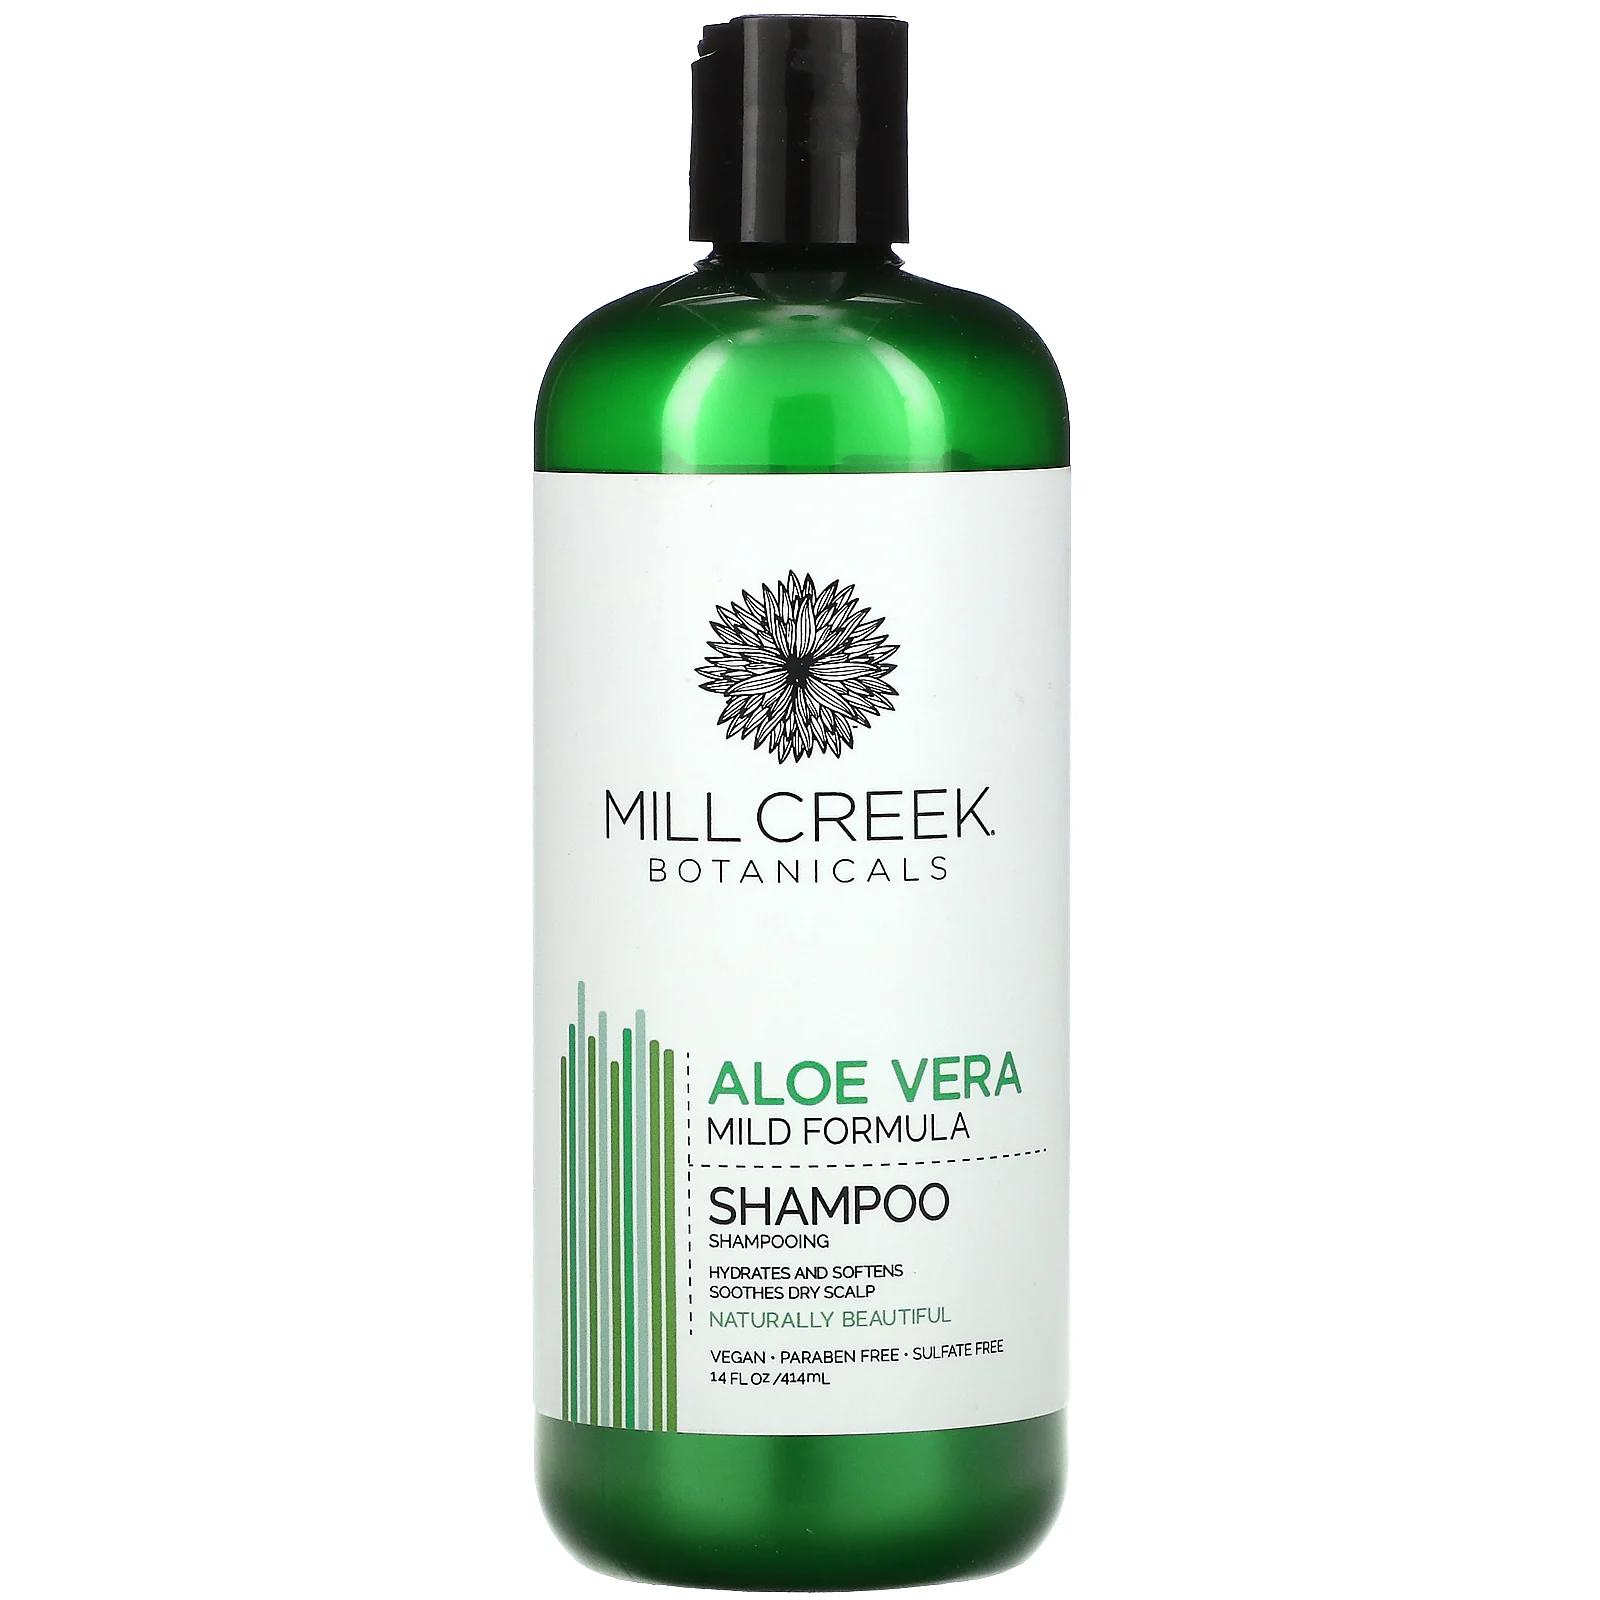 Mill Creek Botanicals Aloe Vera Shampoo Mild Formula 14 fl oz (414 ml)